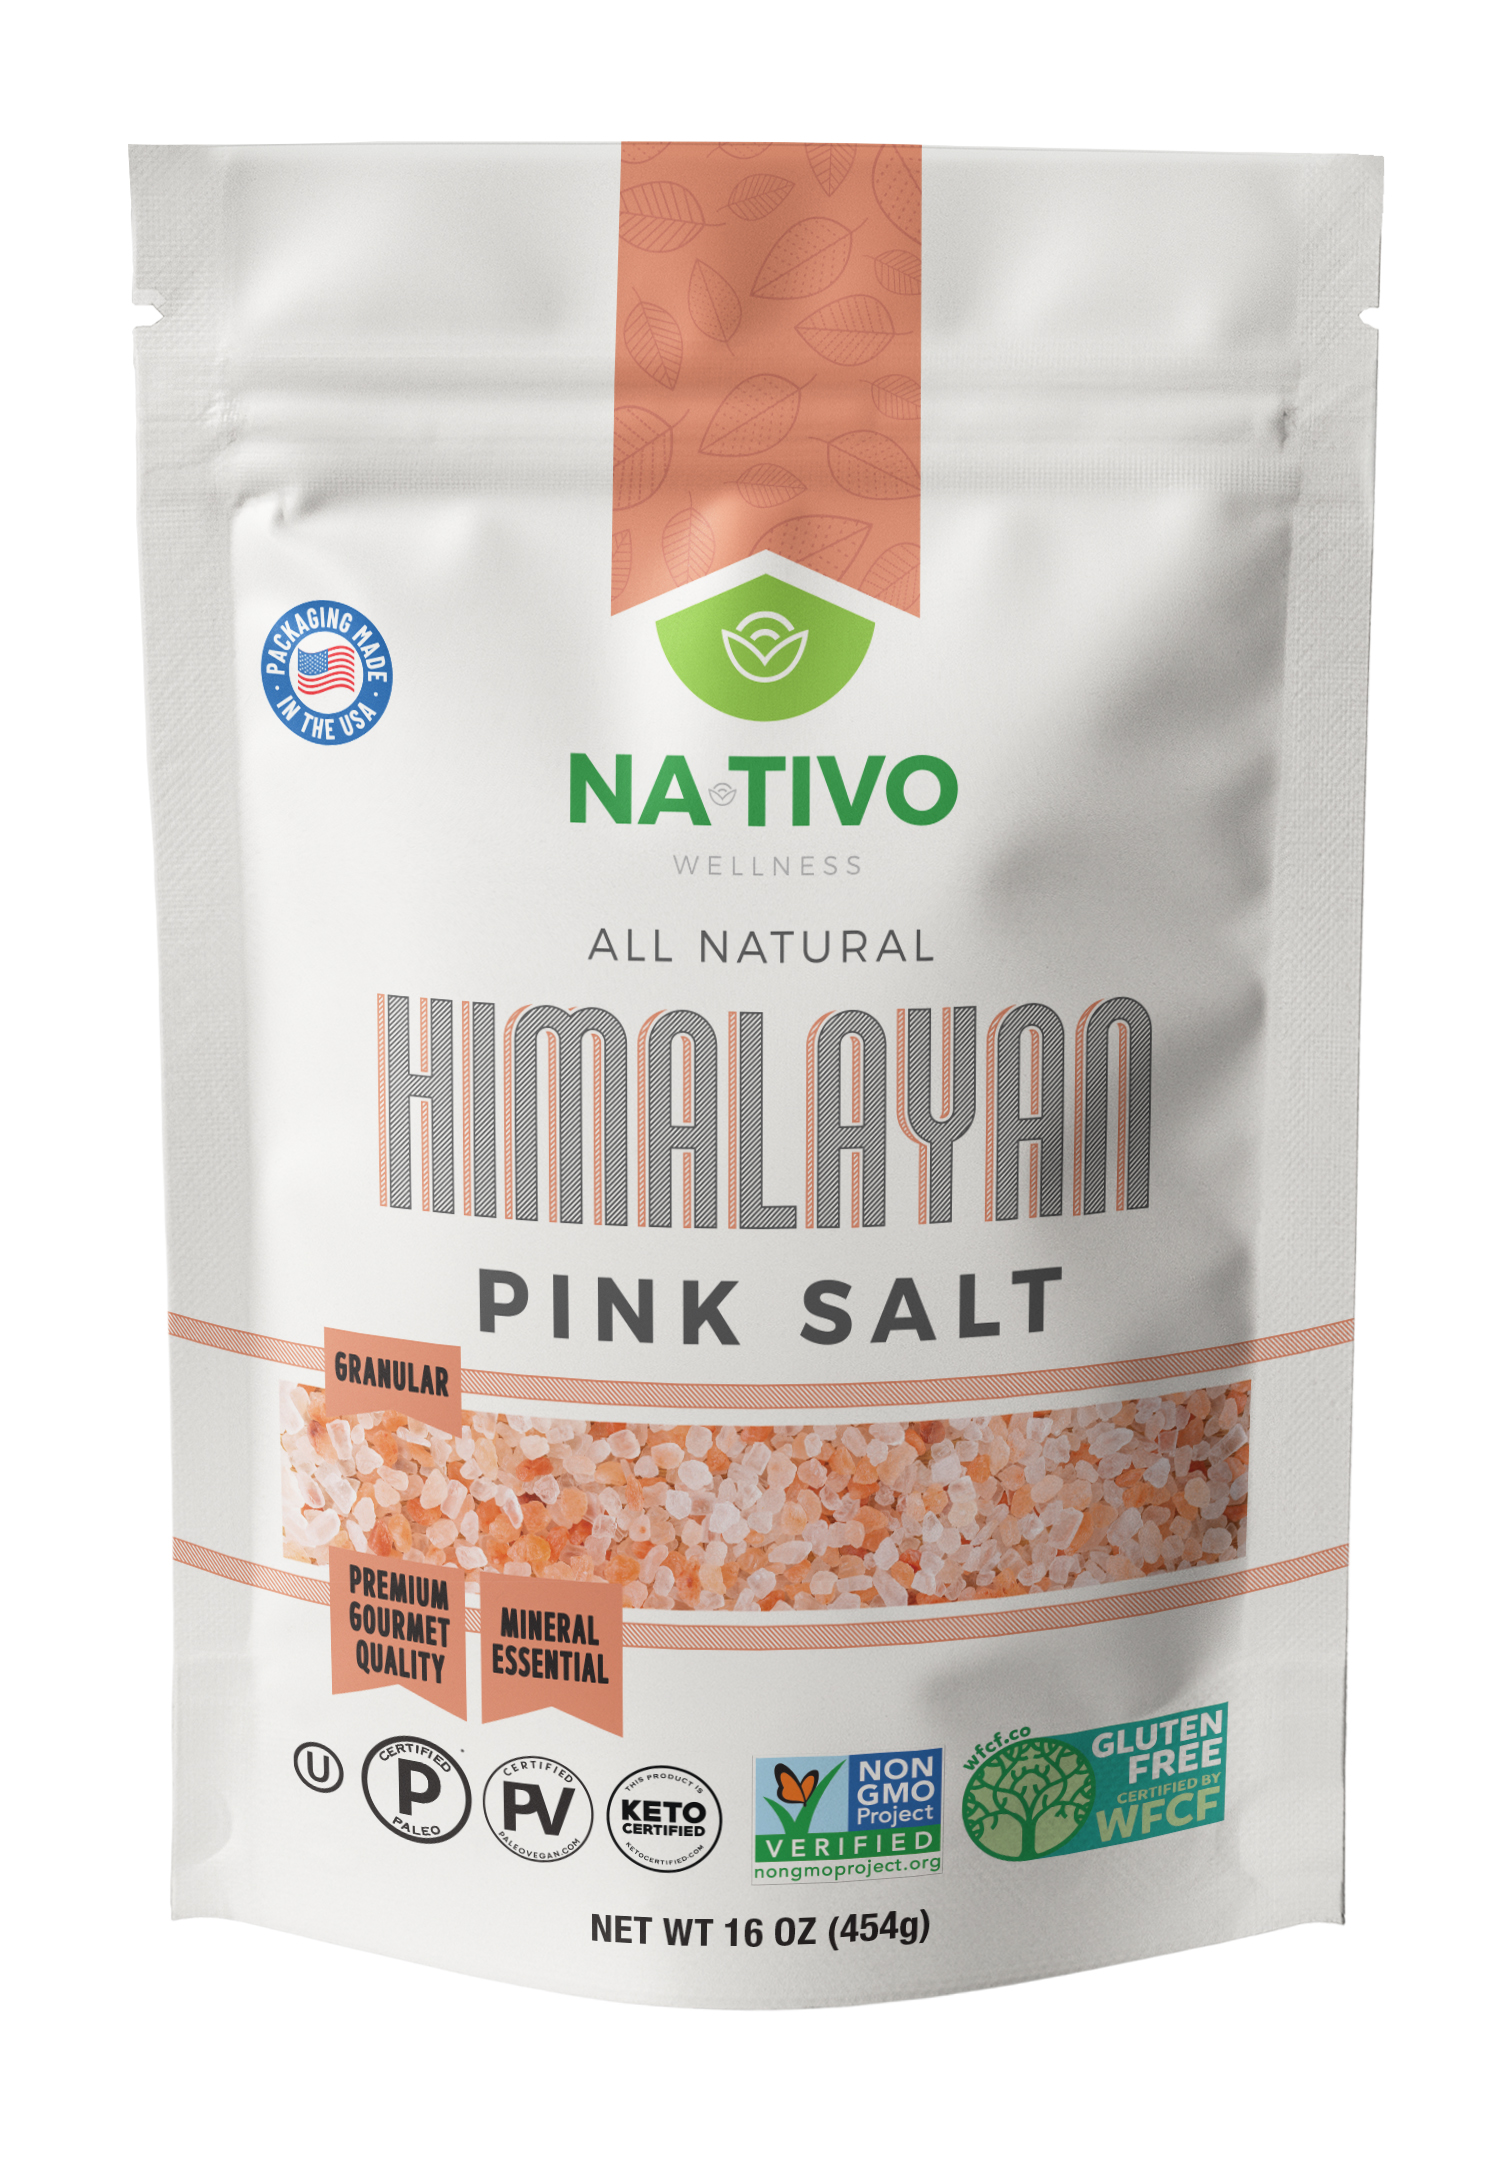 NaTivo All Natural Himalayan Pink Salt 12 units per case 1.0 lb